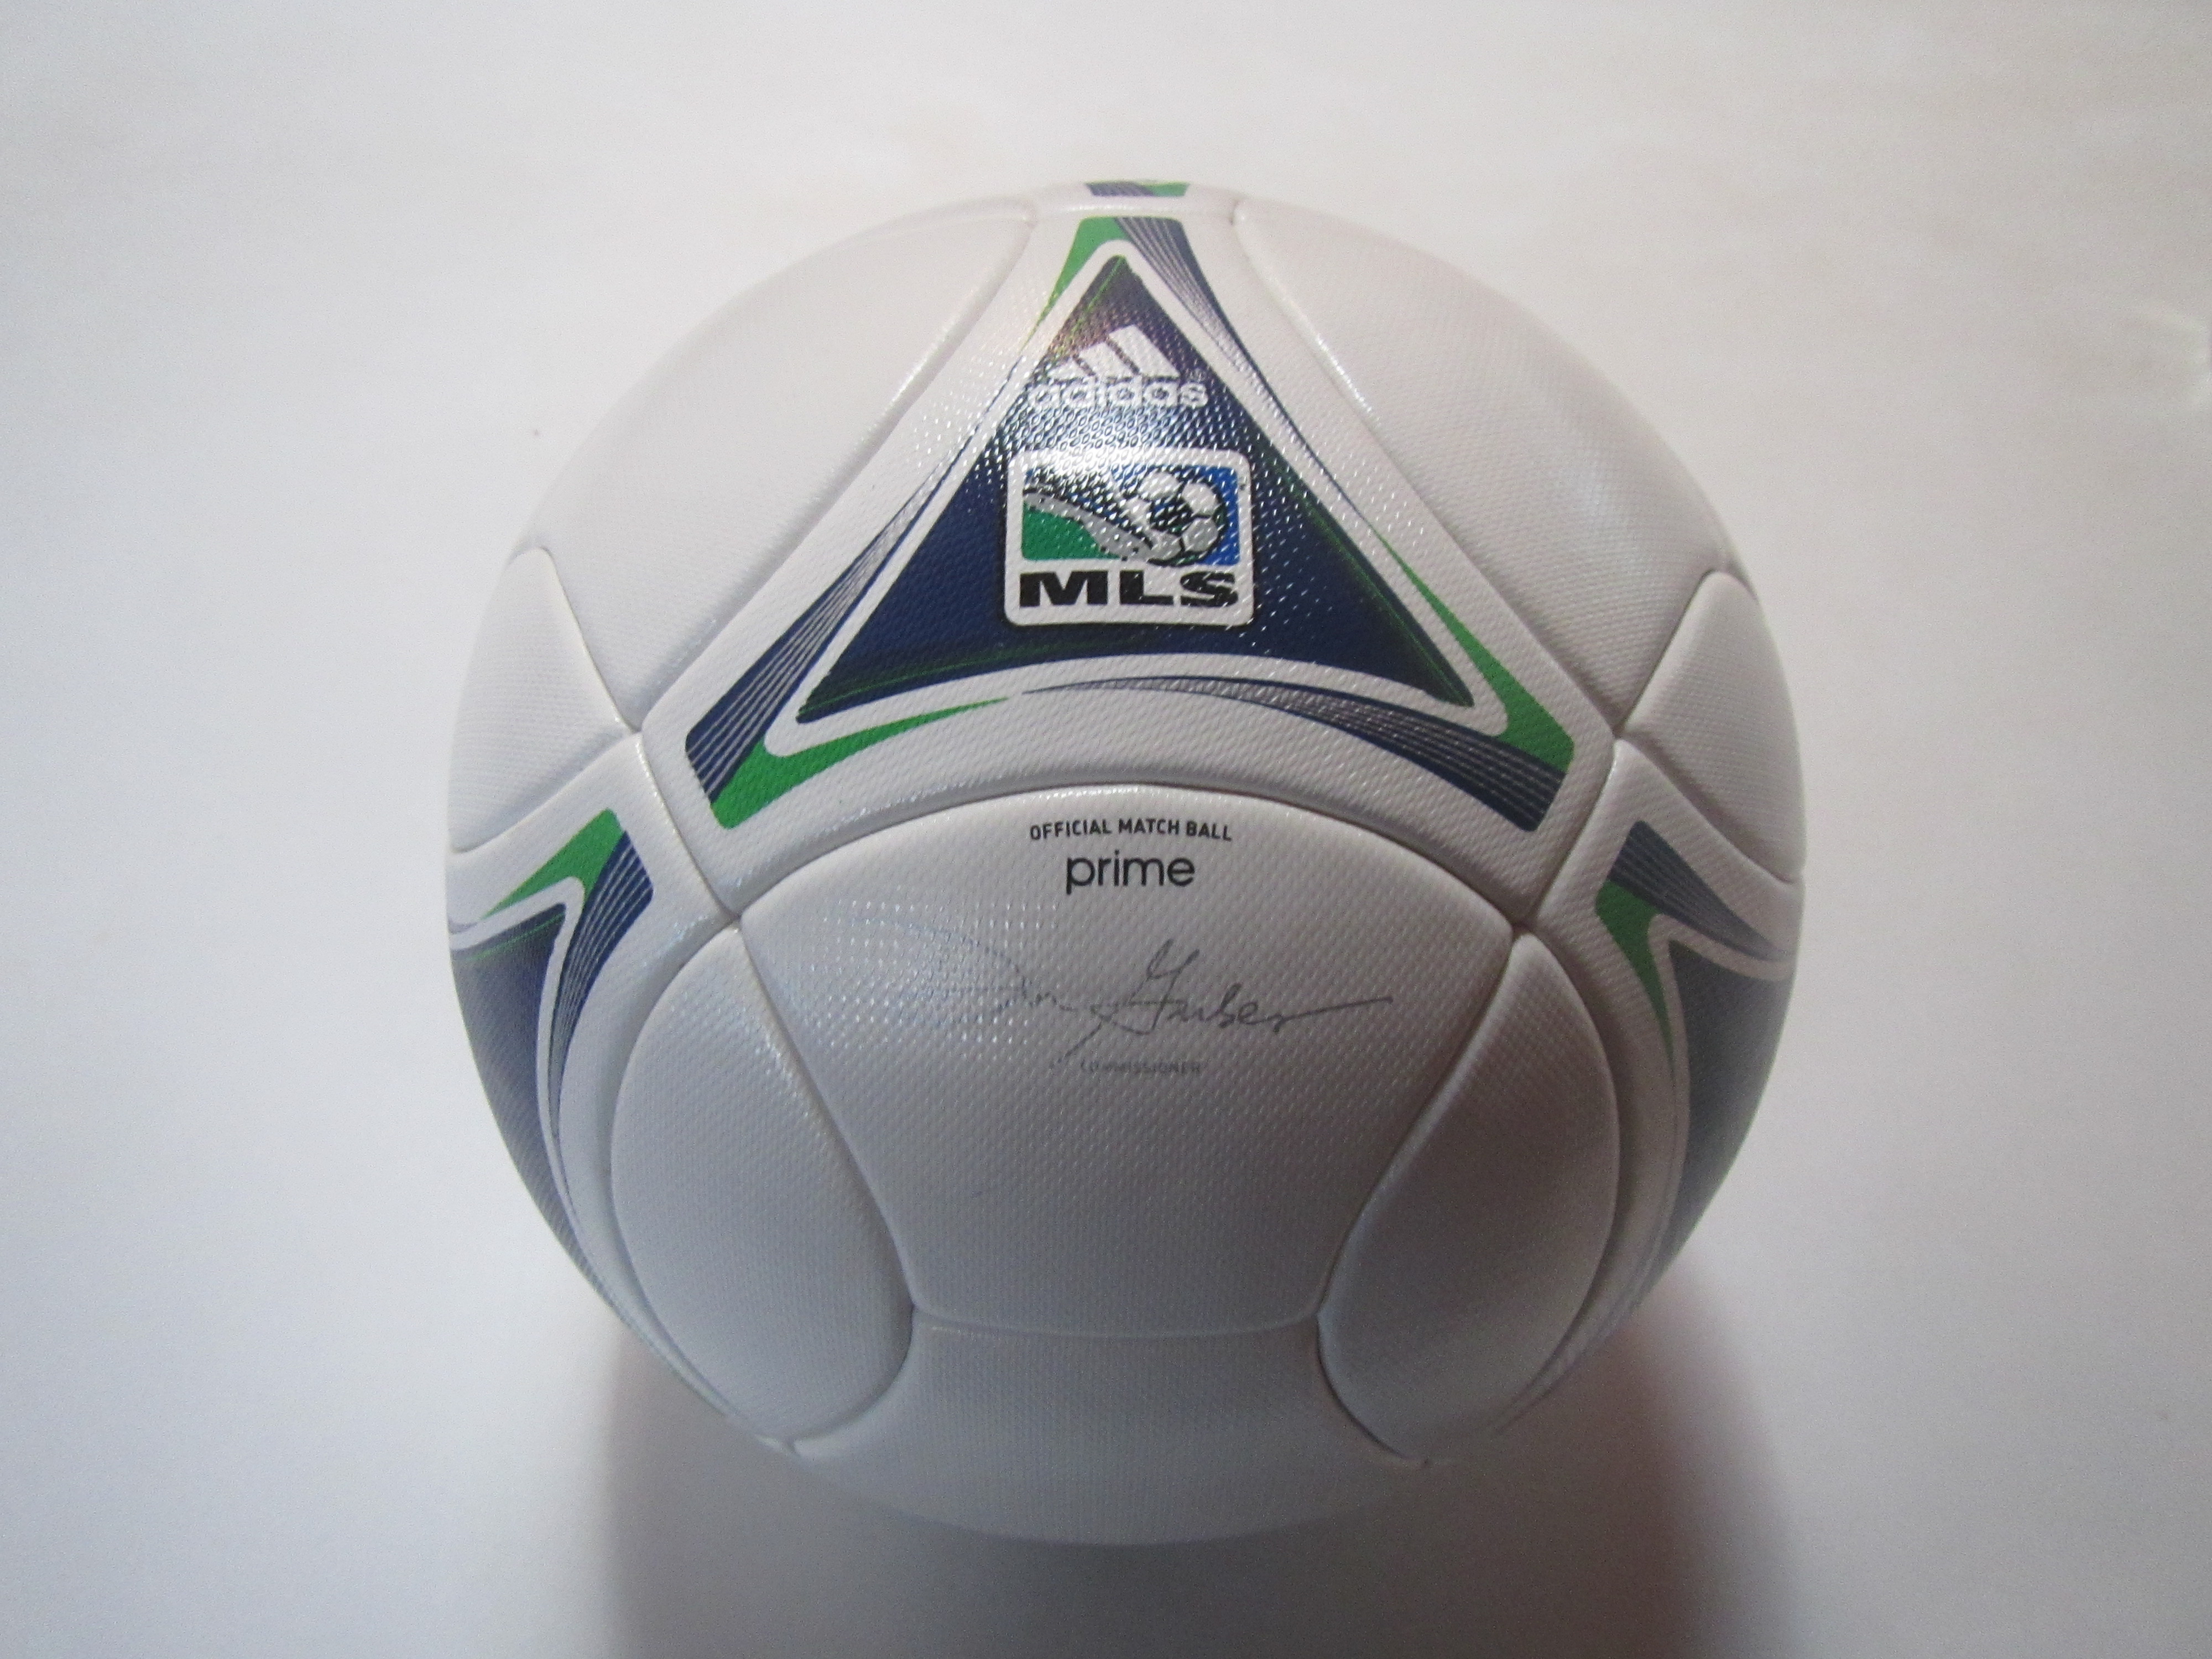 File:Adidas MLS Tango 12 soccer ball.jpg - Wikimedia Commons